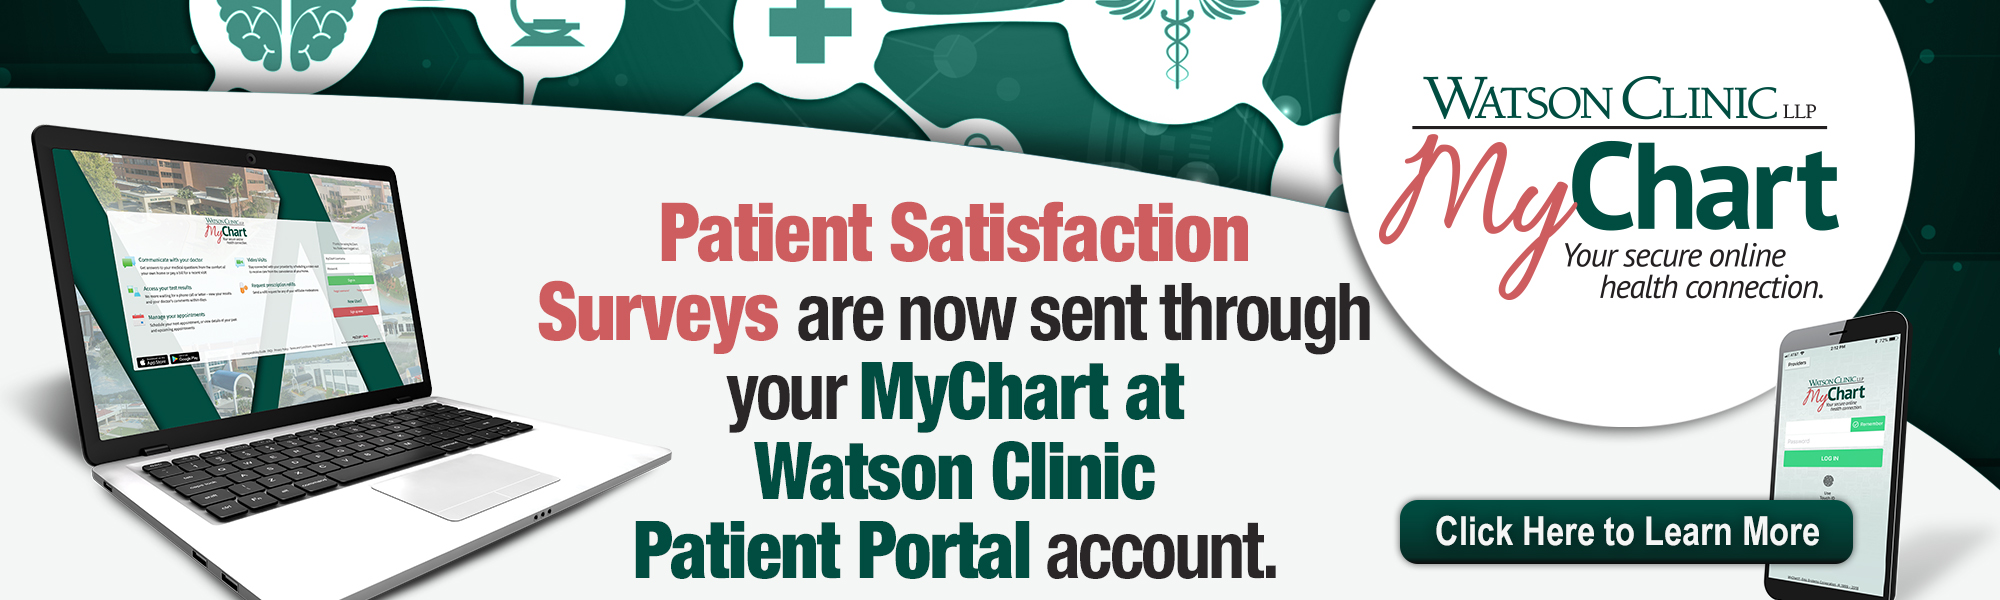 watson clinic online bill pay